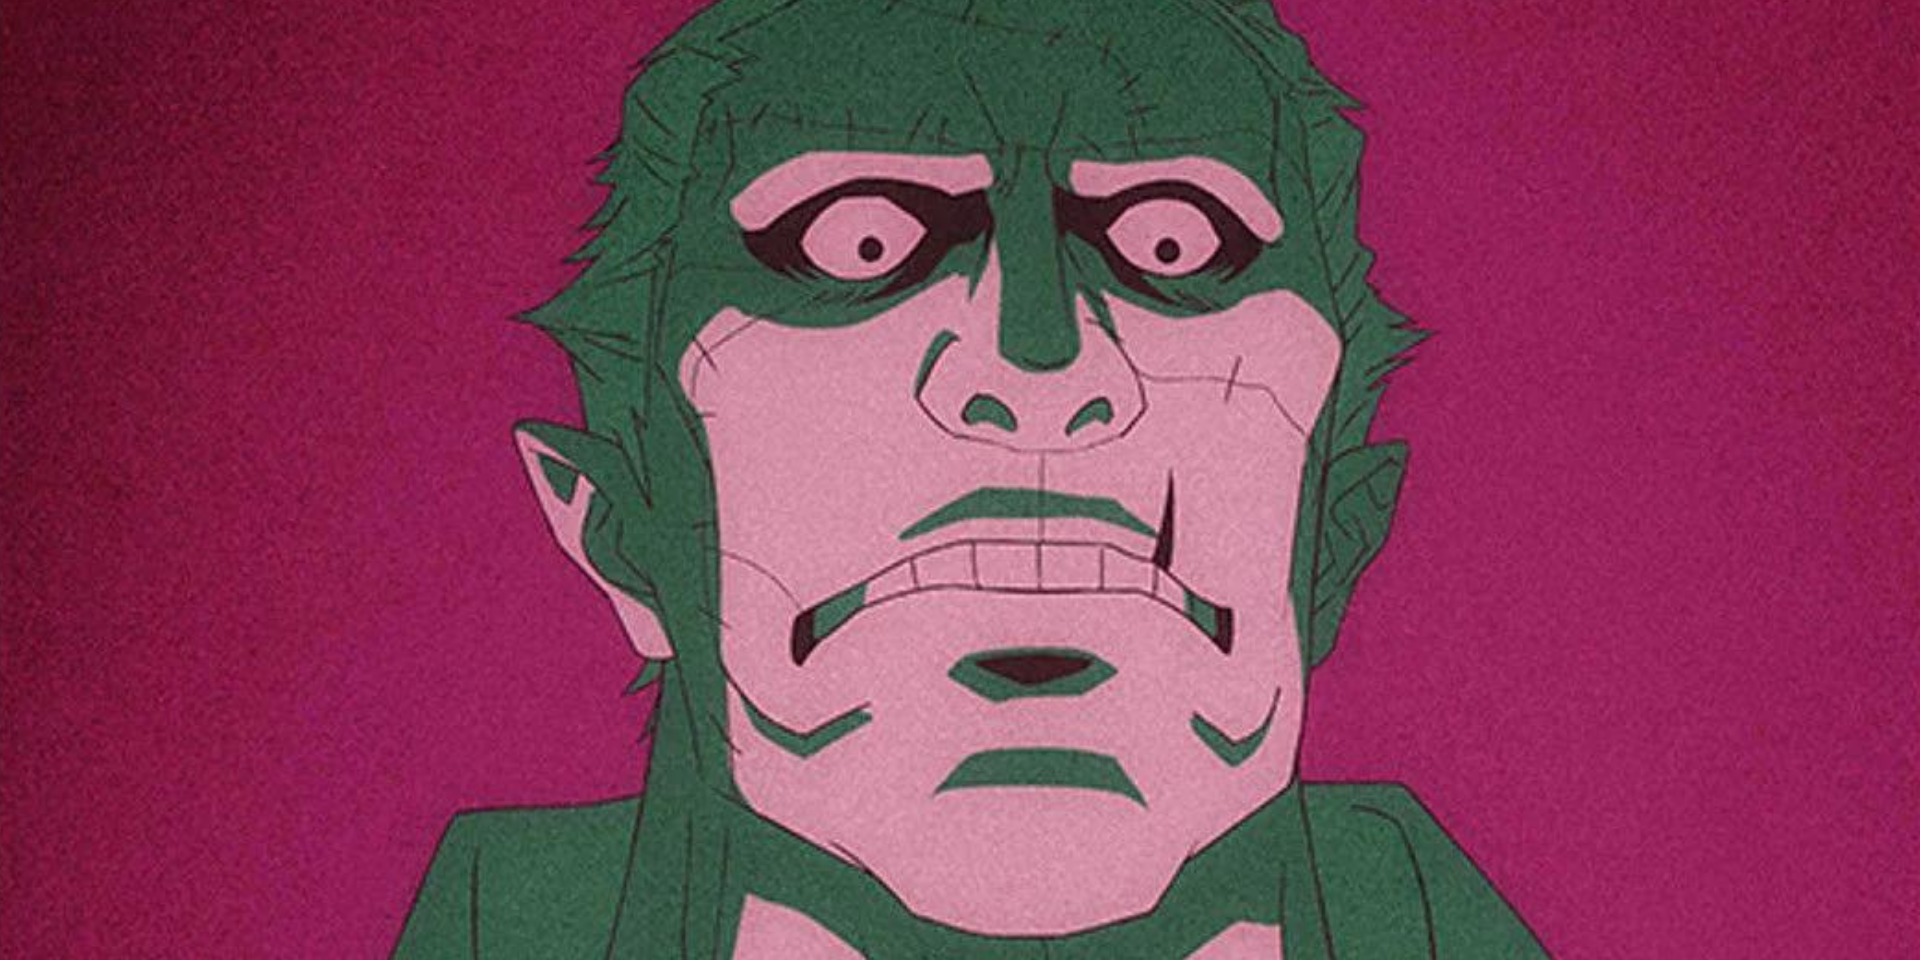 Viktor Frankenstein em farsa de assassinato de garota morta-viva